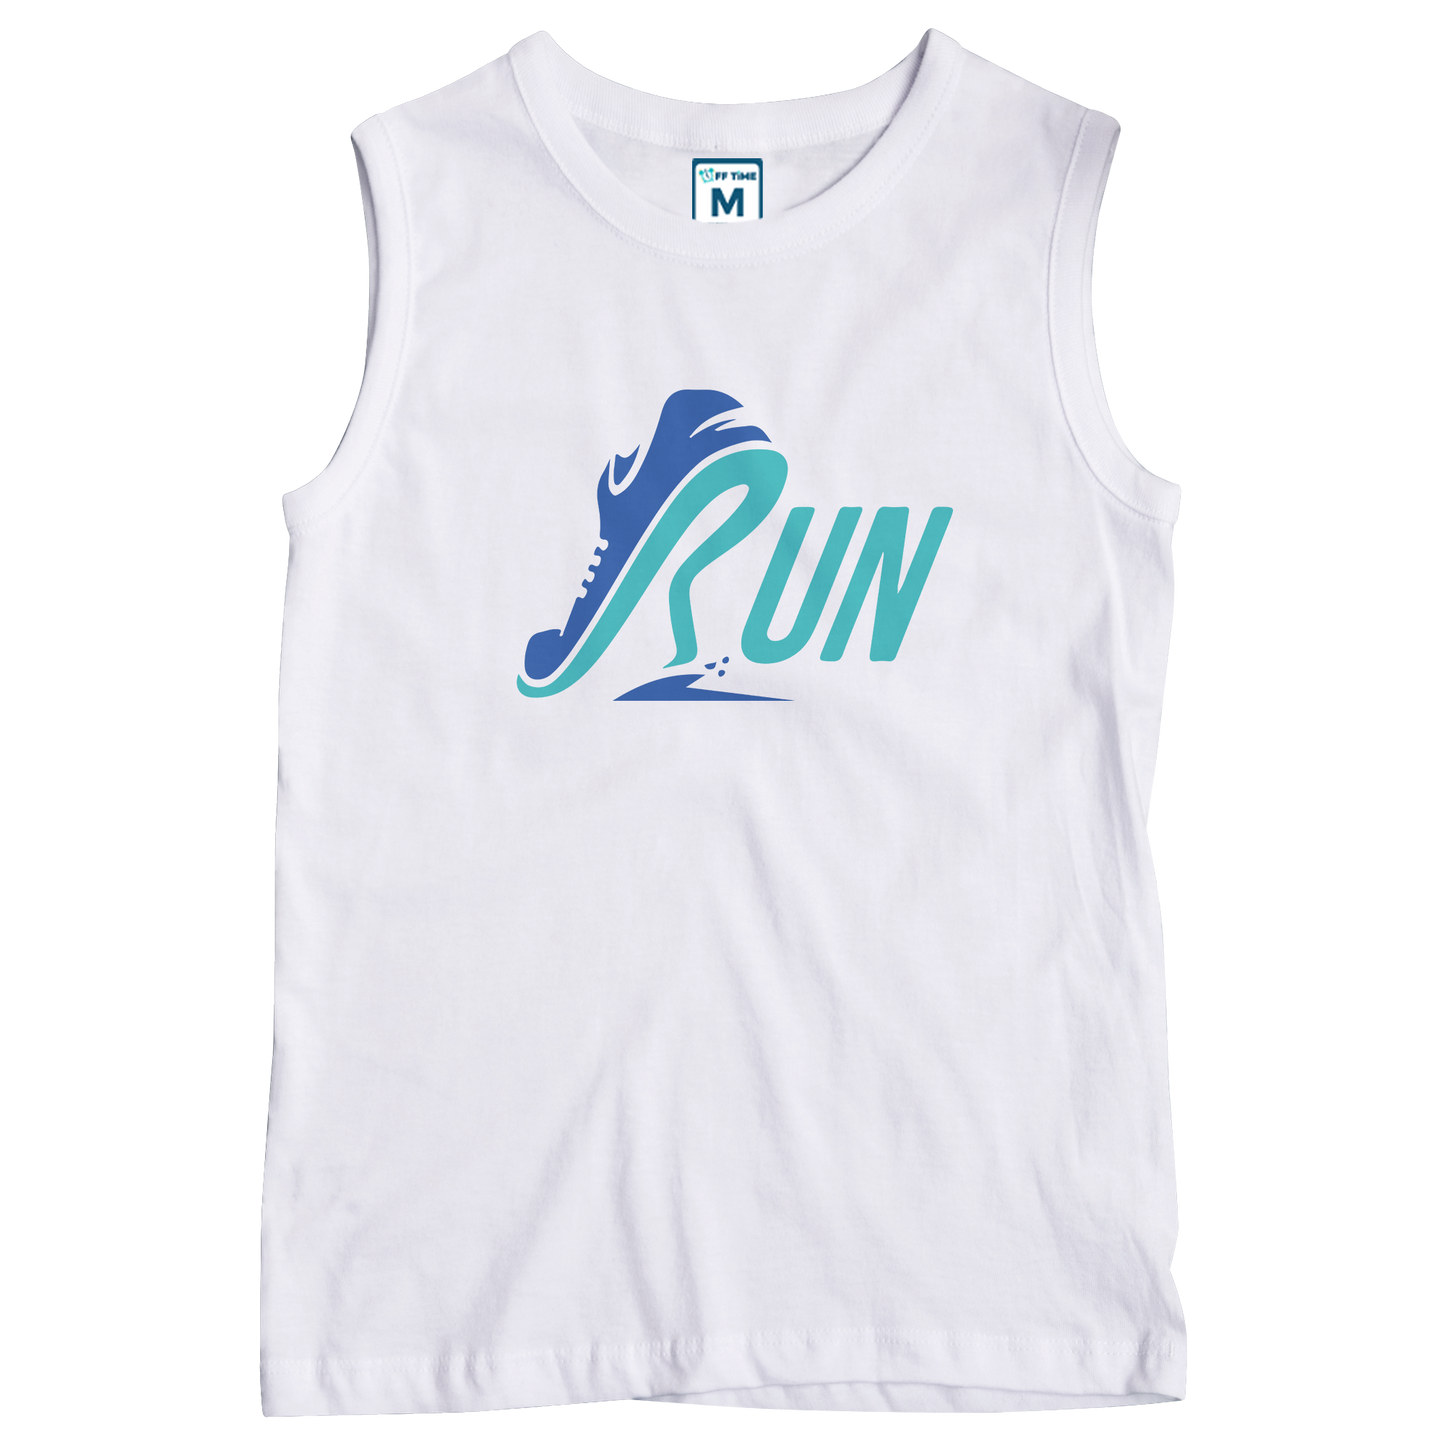 Sleeveless Drifit Shirt: Run Shoe